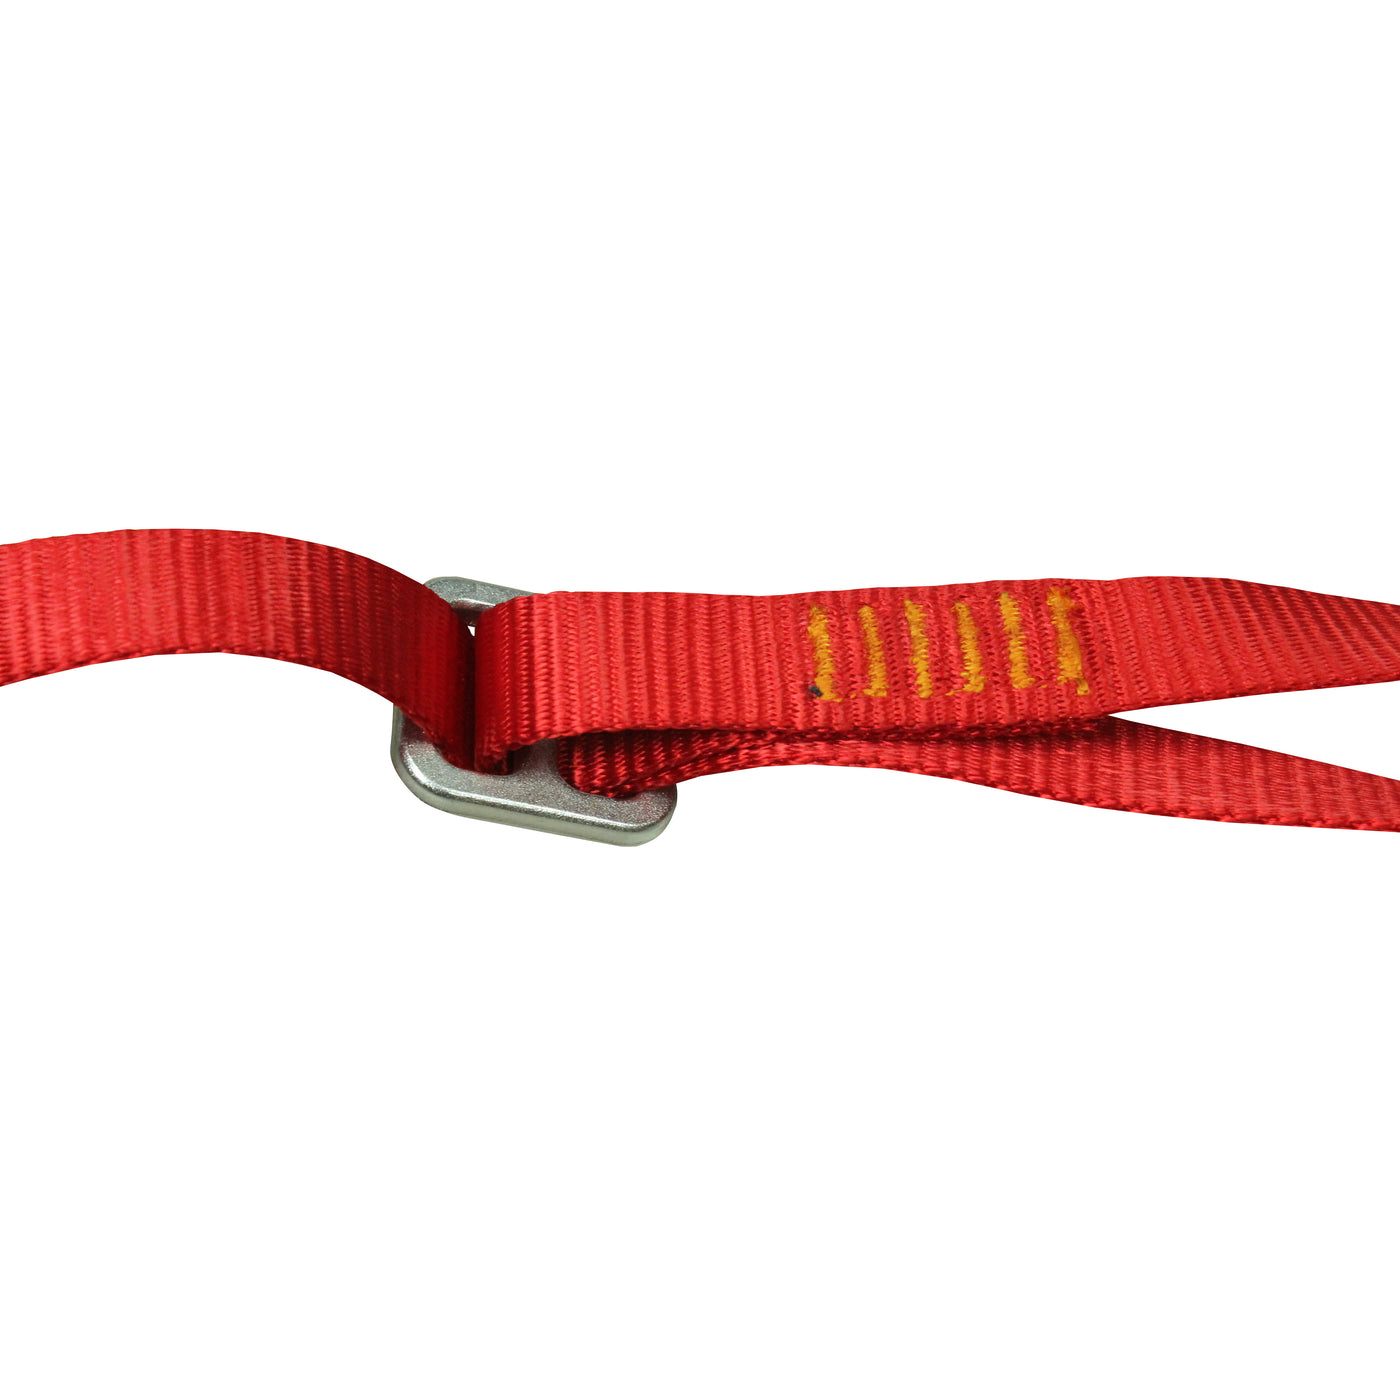 Adjustable Safety Lanyard - Red